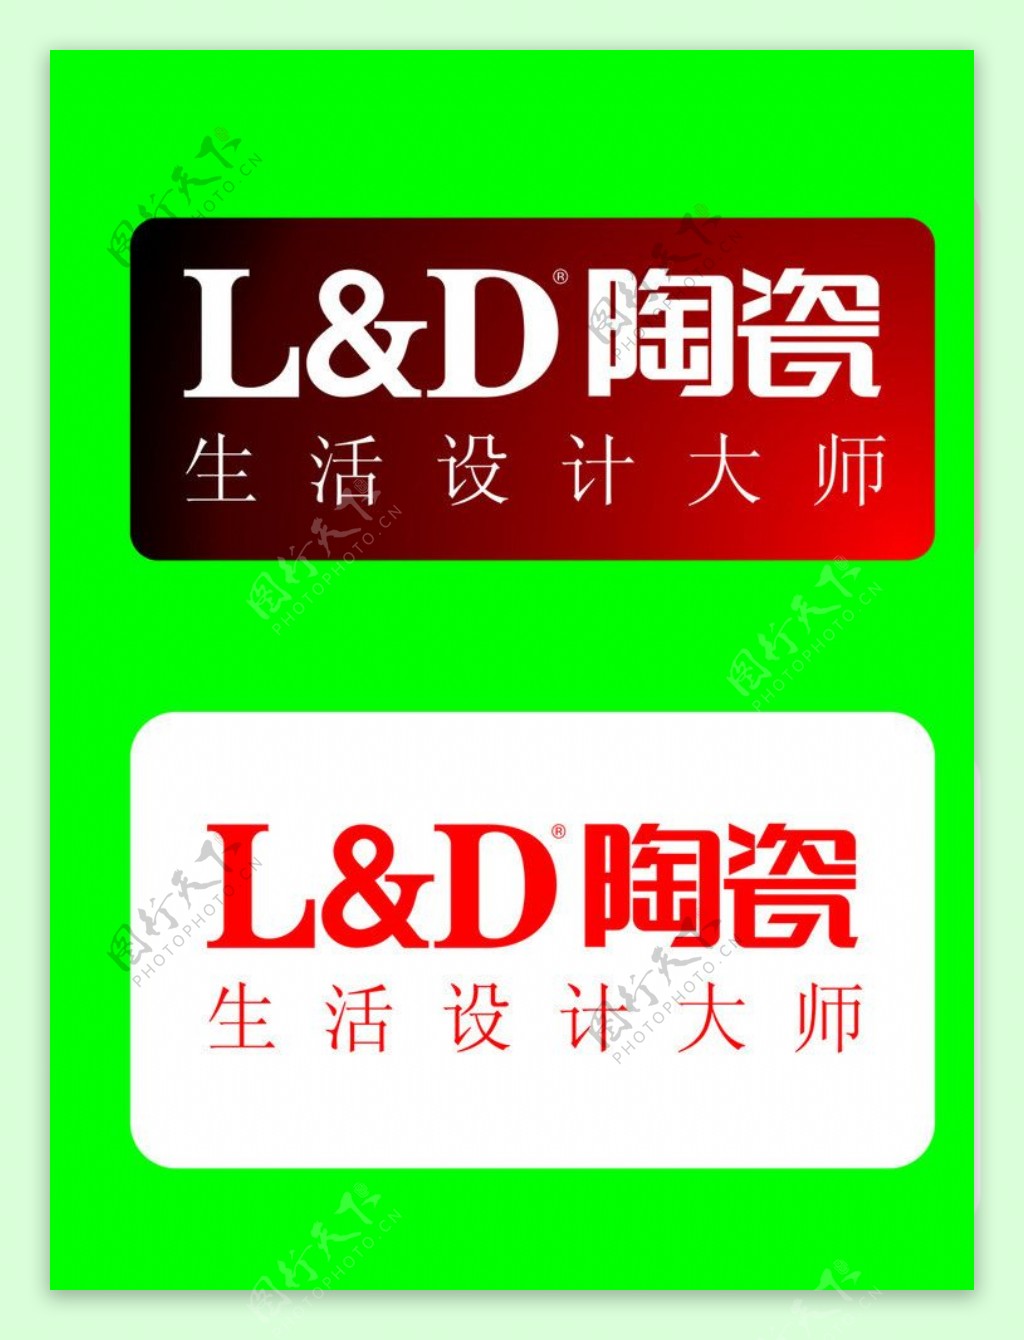 LED陶瓷标志图片